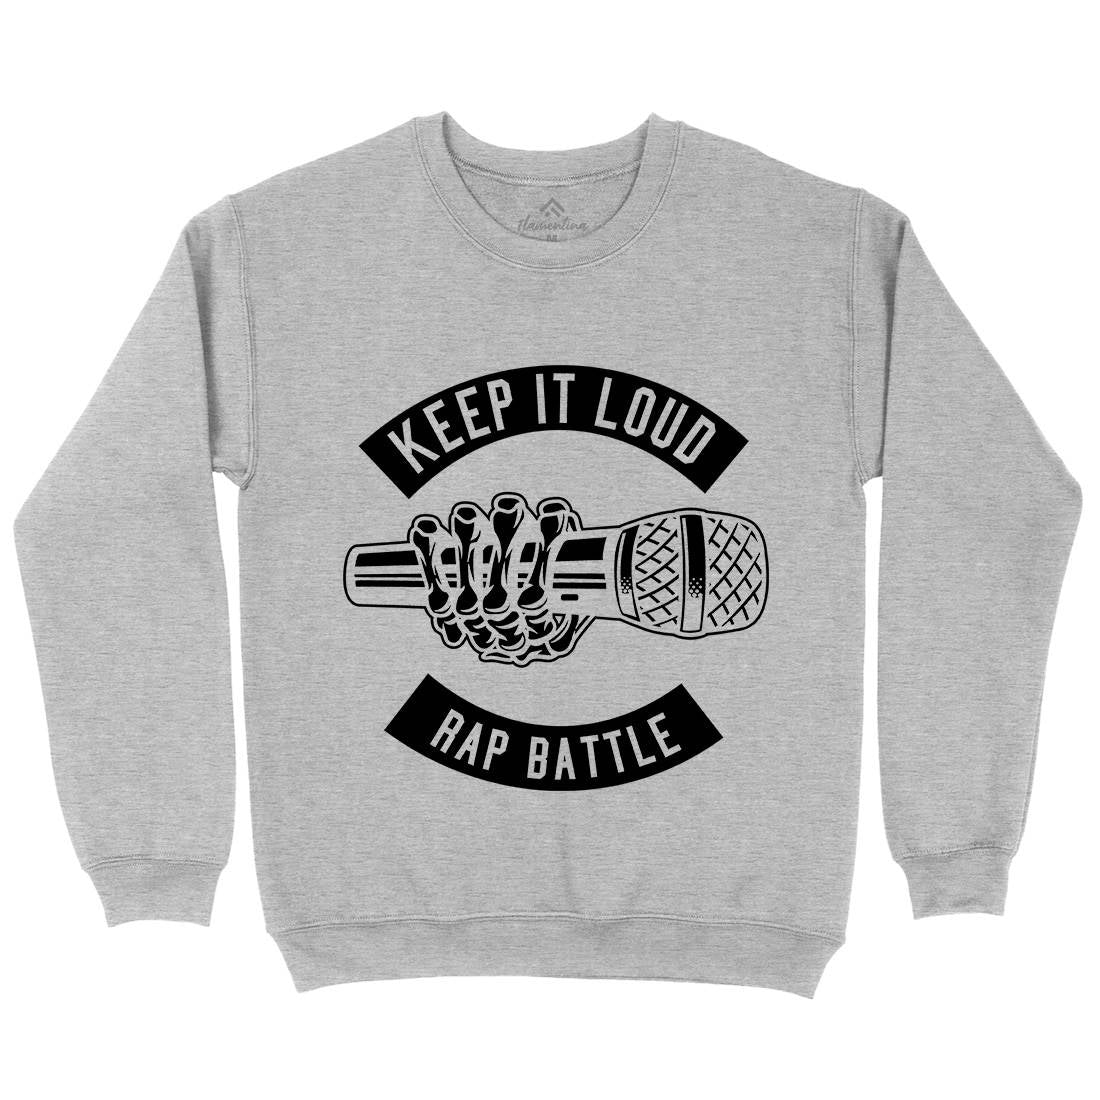 Keep It Loud Kids Crew Neck Sweatshirt Music B568